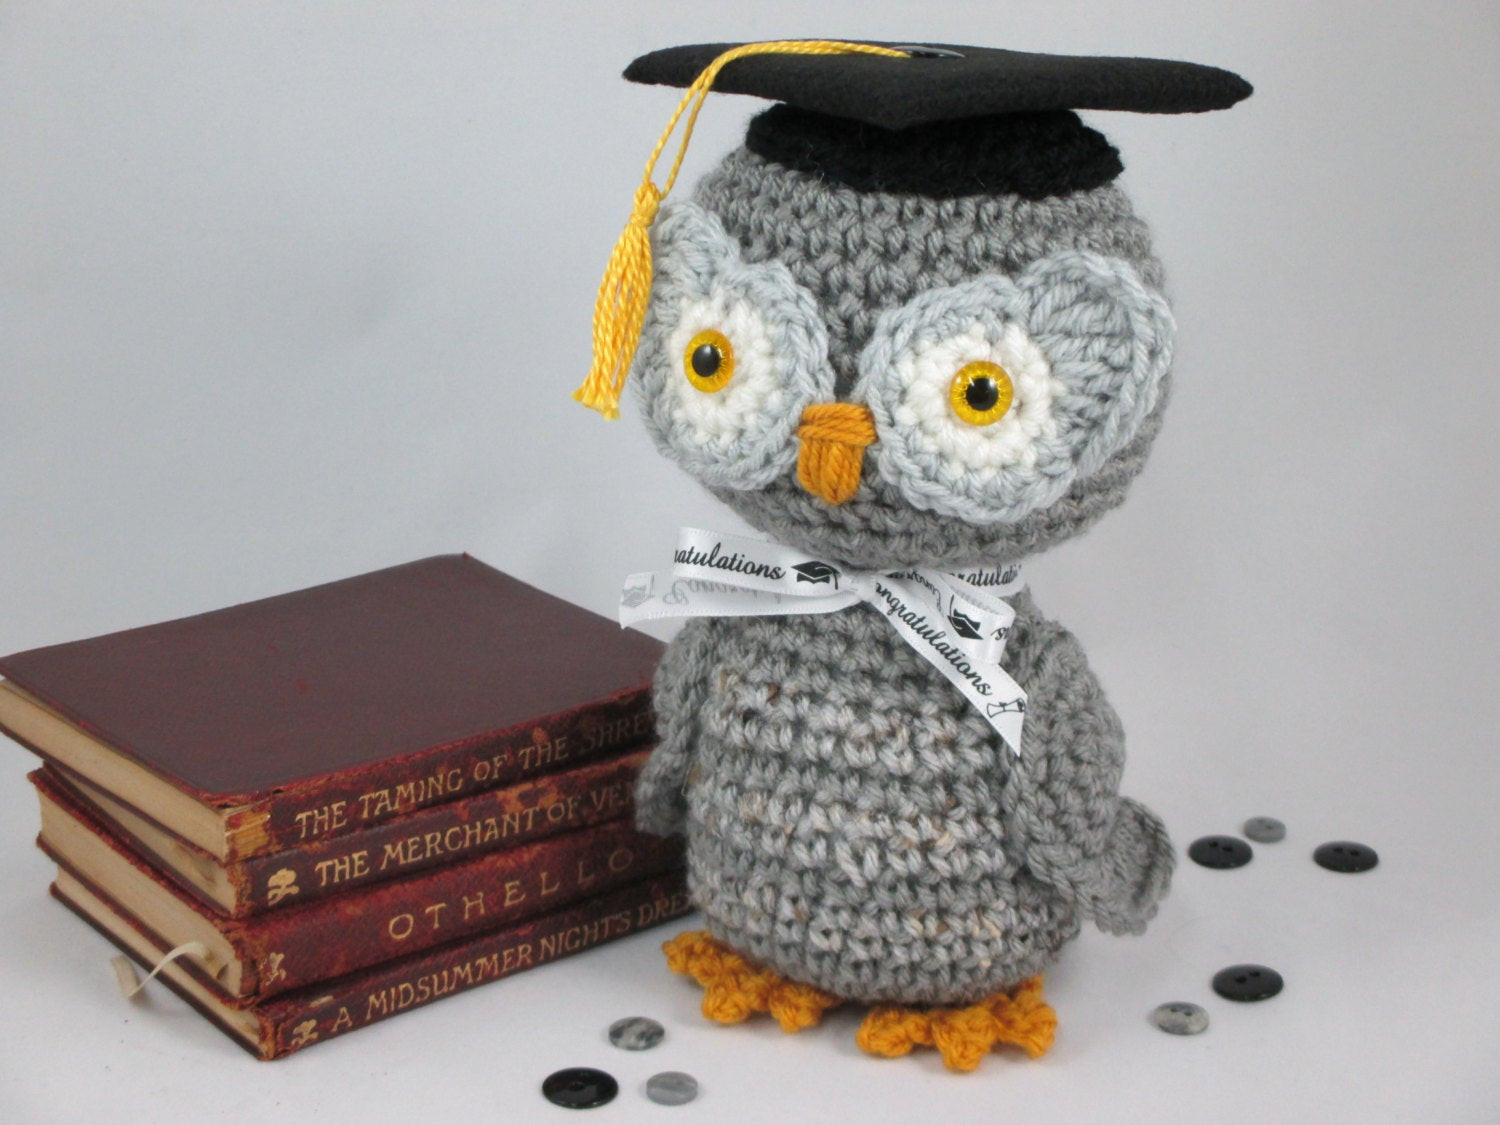 Best ideas about Crochet Graduation Gift Ideas
. Save or Pin Graduation Gift Crochet Owl with Graduate Cap Graduation Now.